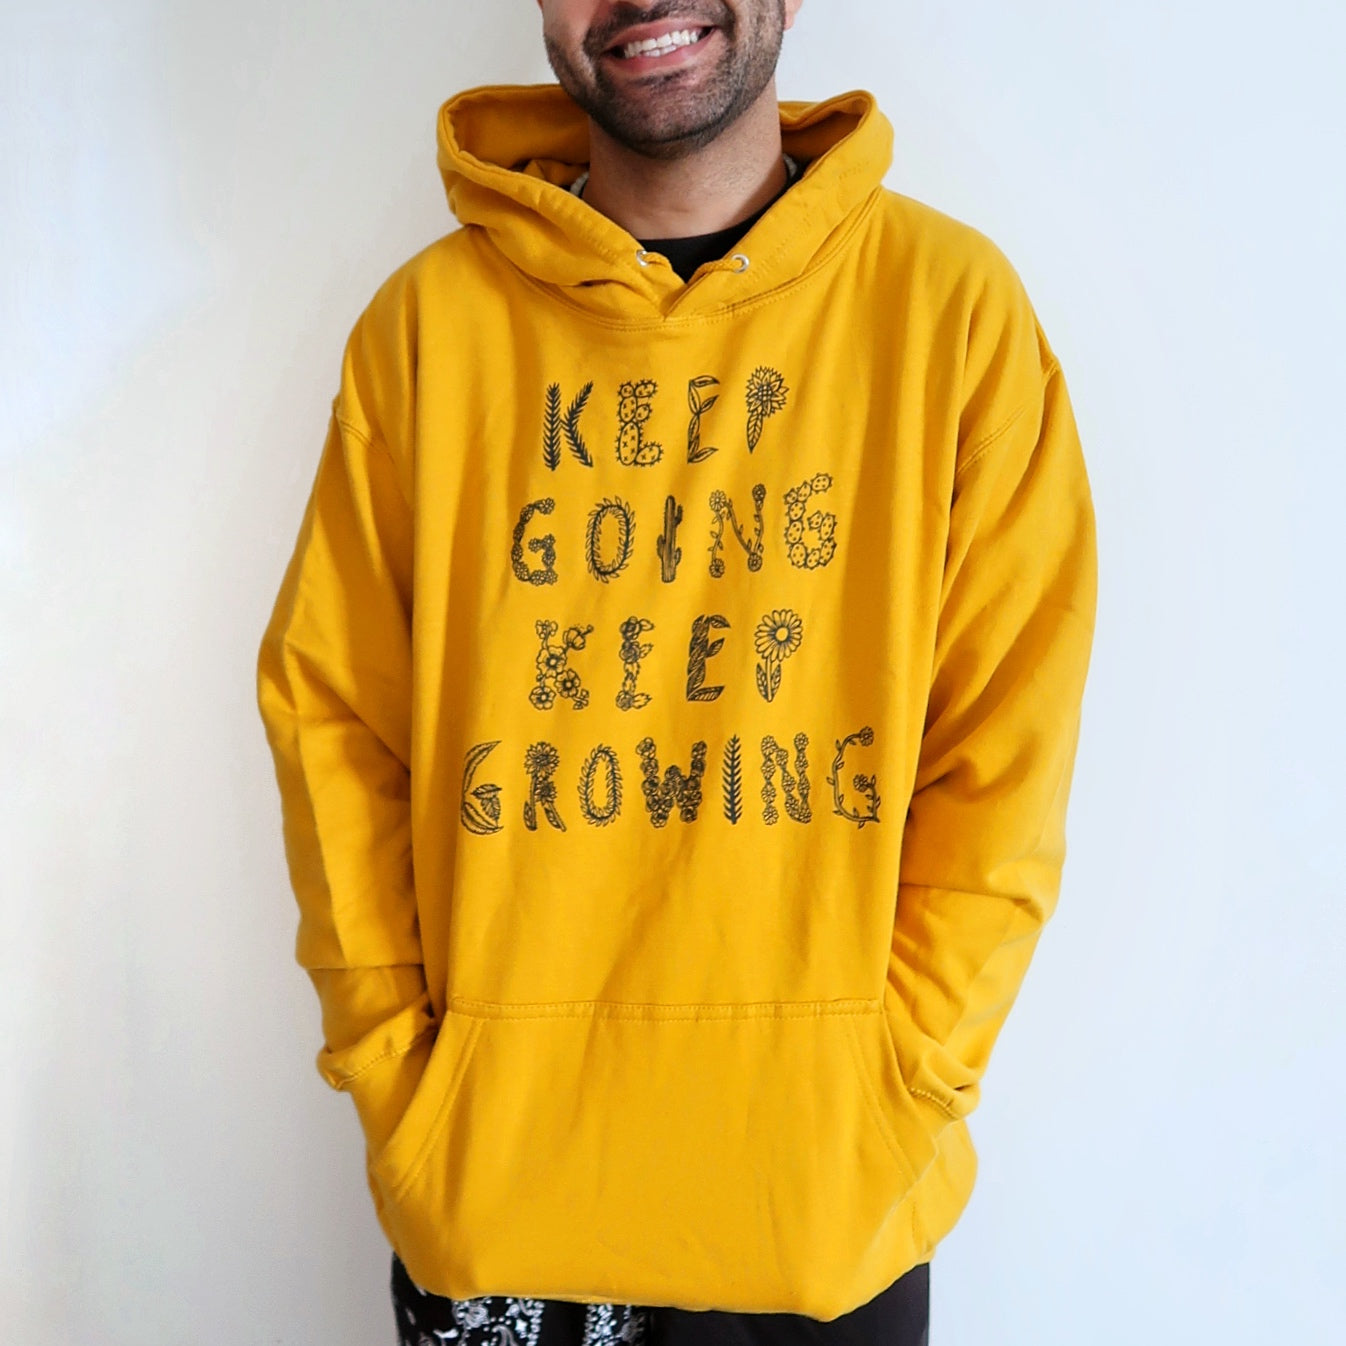 keep going, keep growing hoodie - mustard yellow